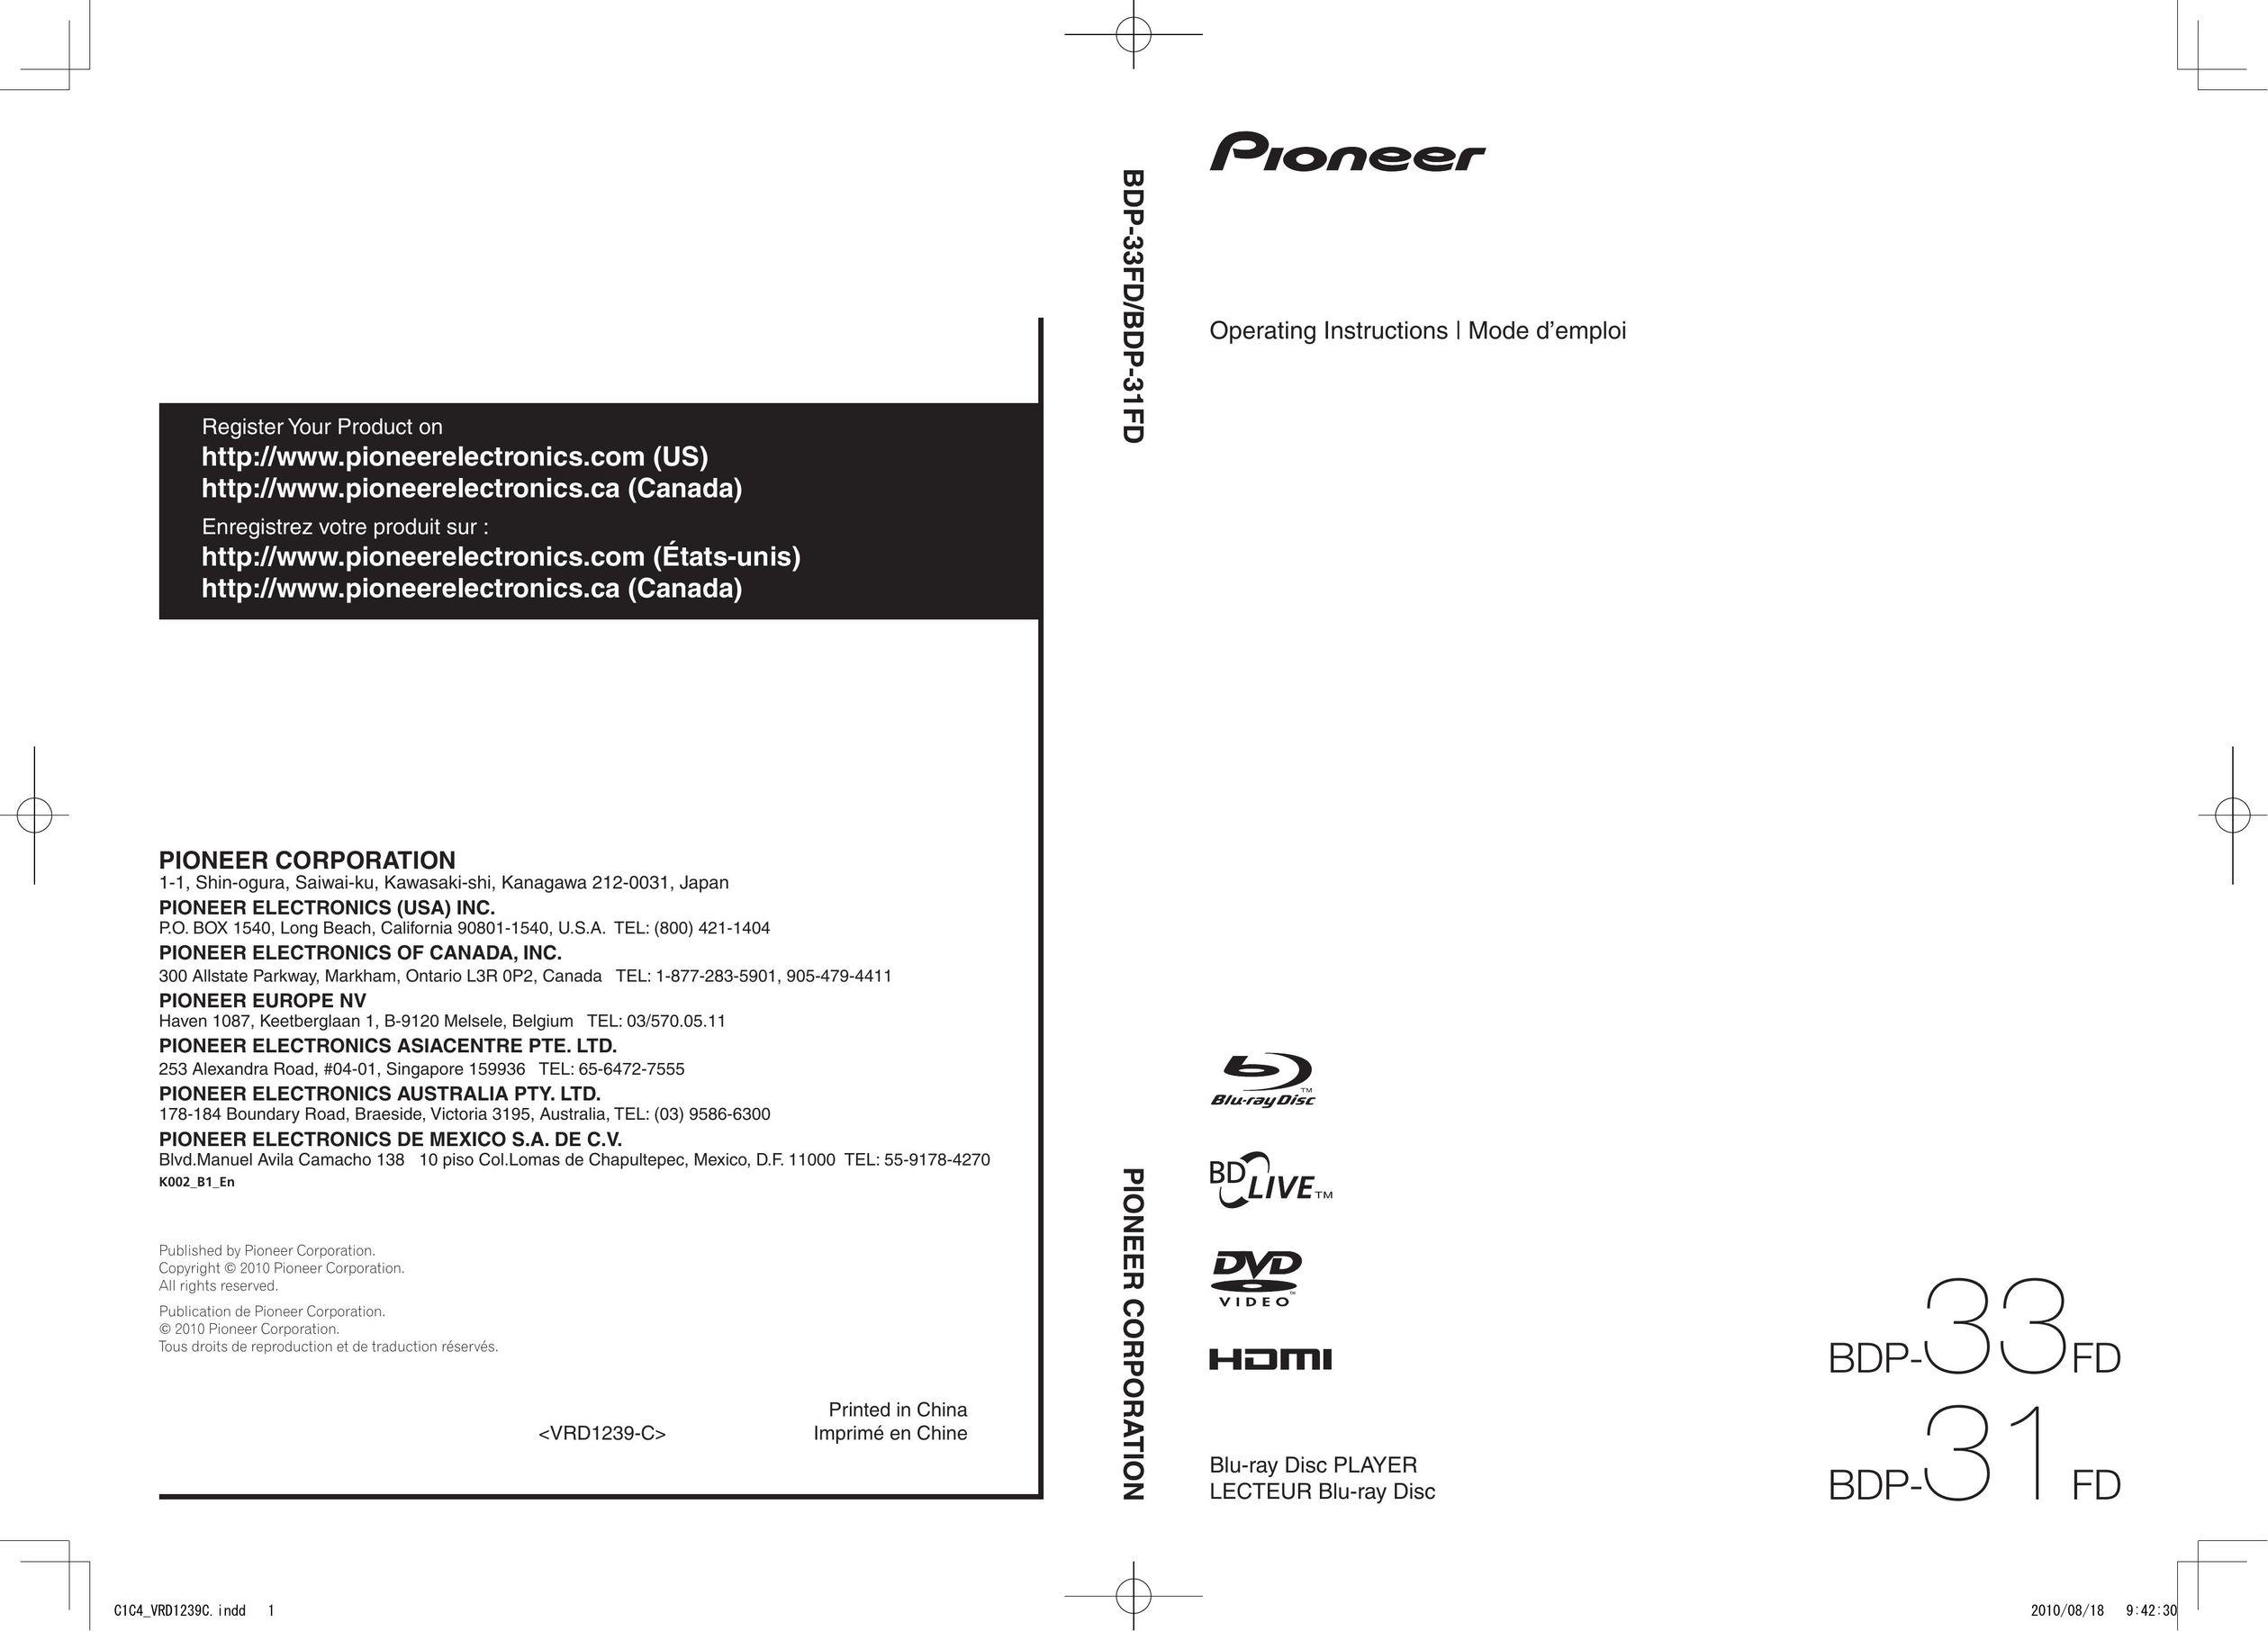 Pioneer BDP-33FD Bluetooth Headset User Manual